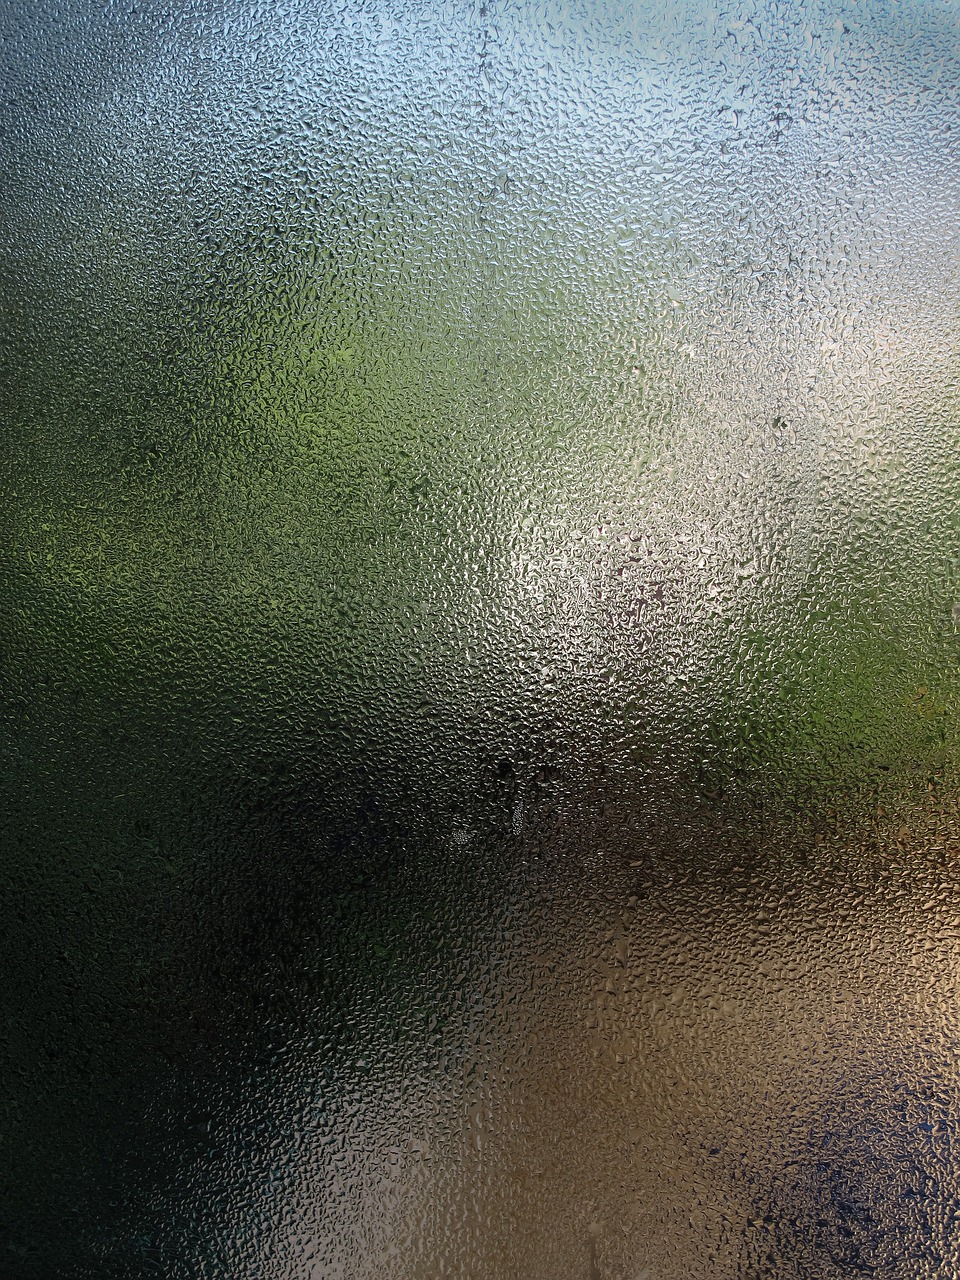 glass drop of water fogging free photo